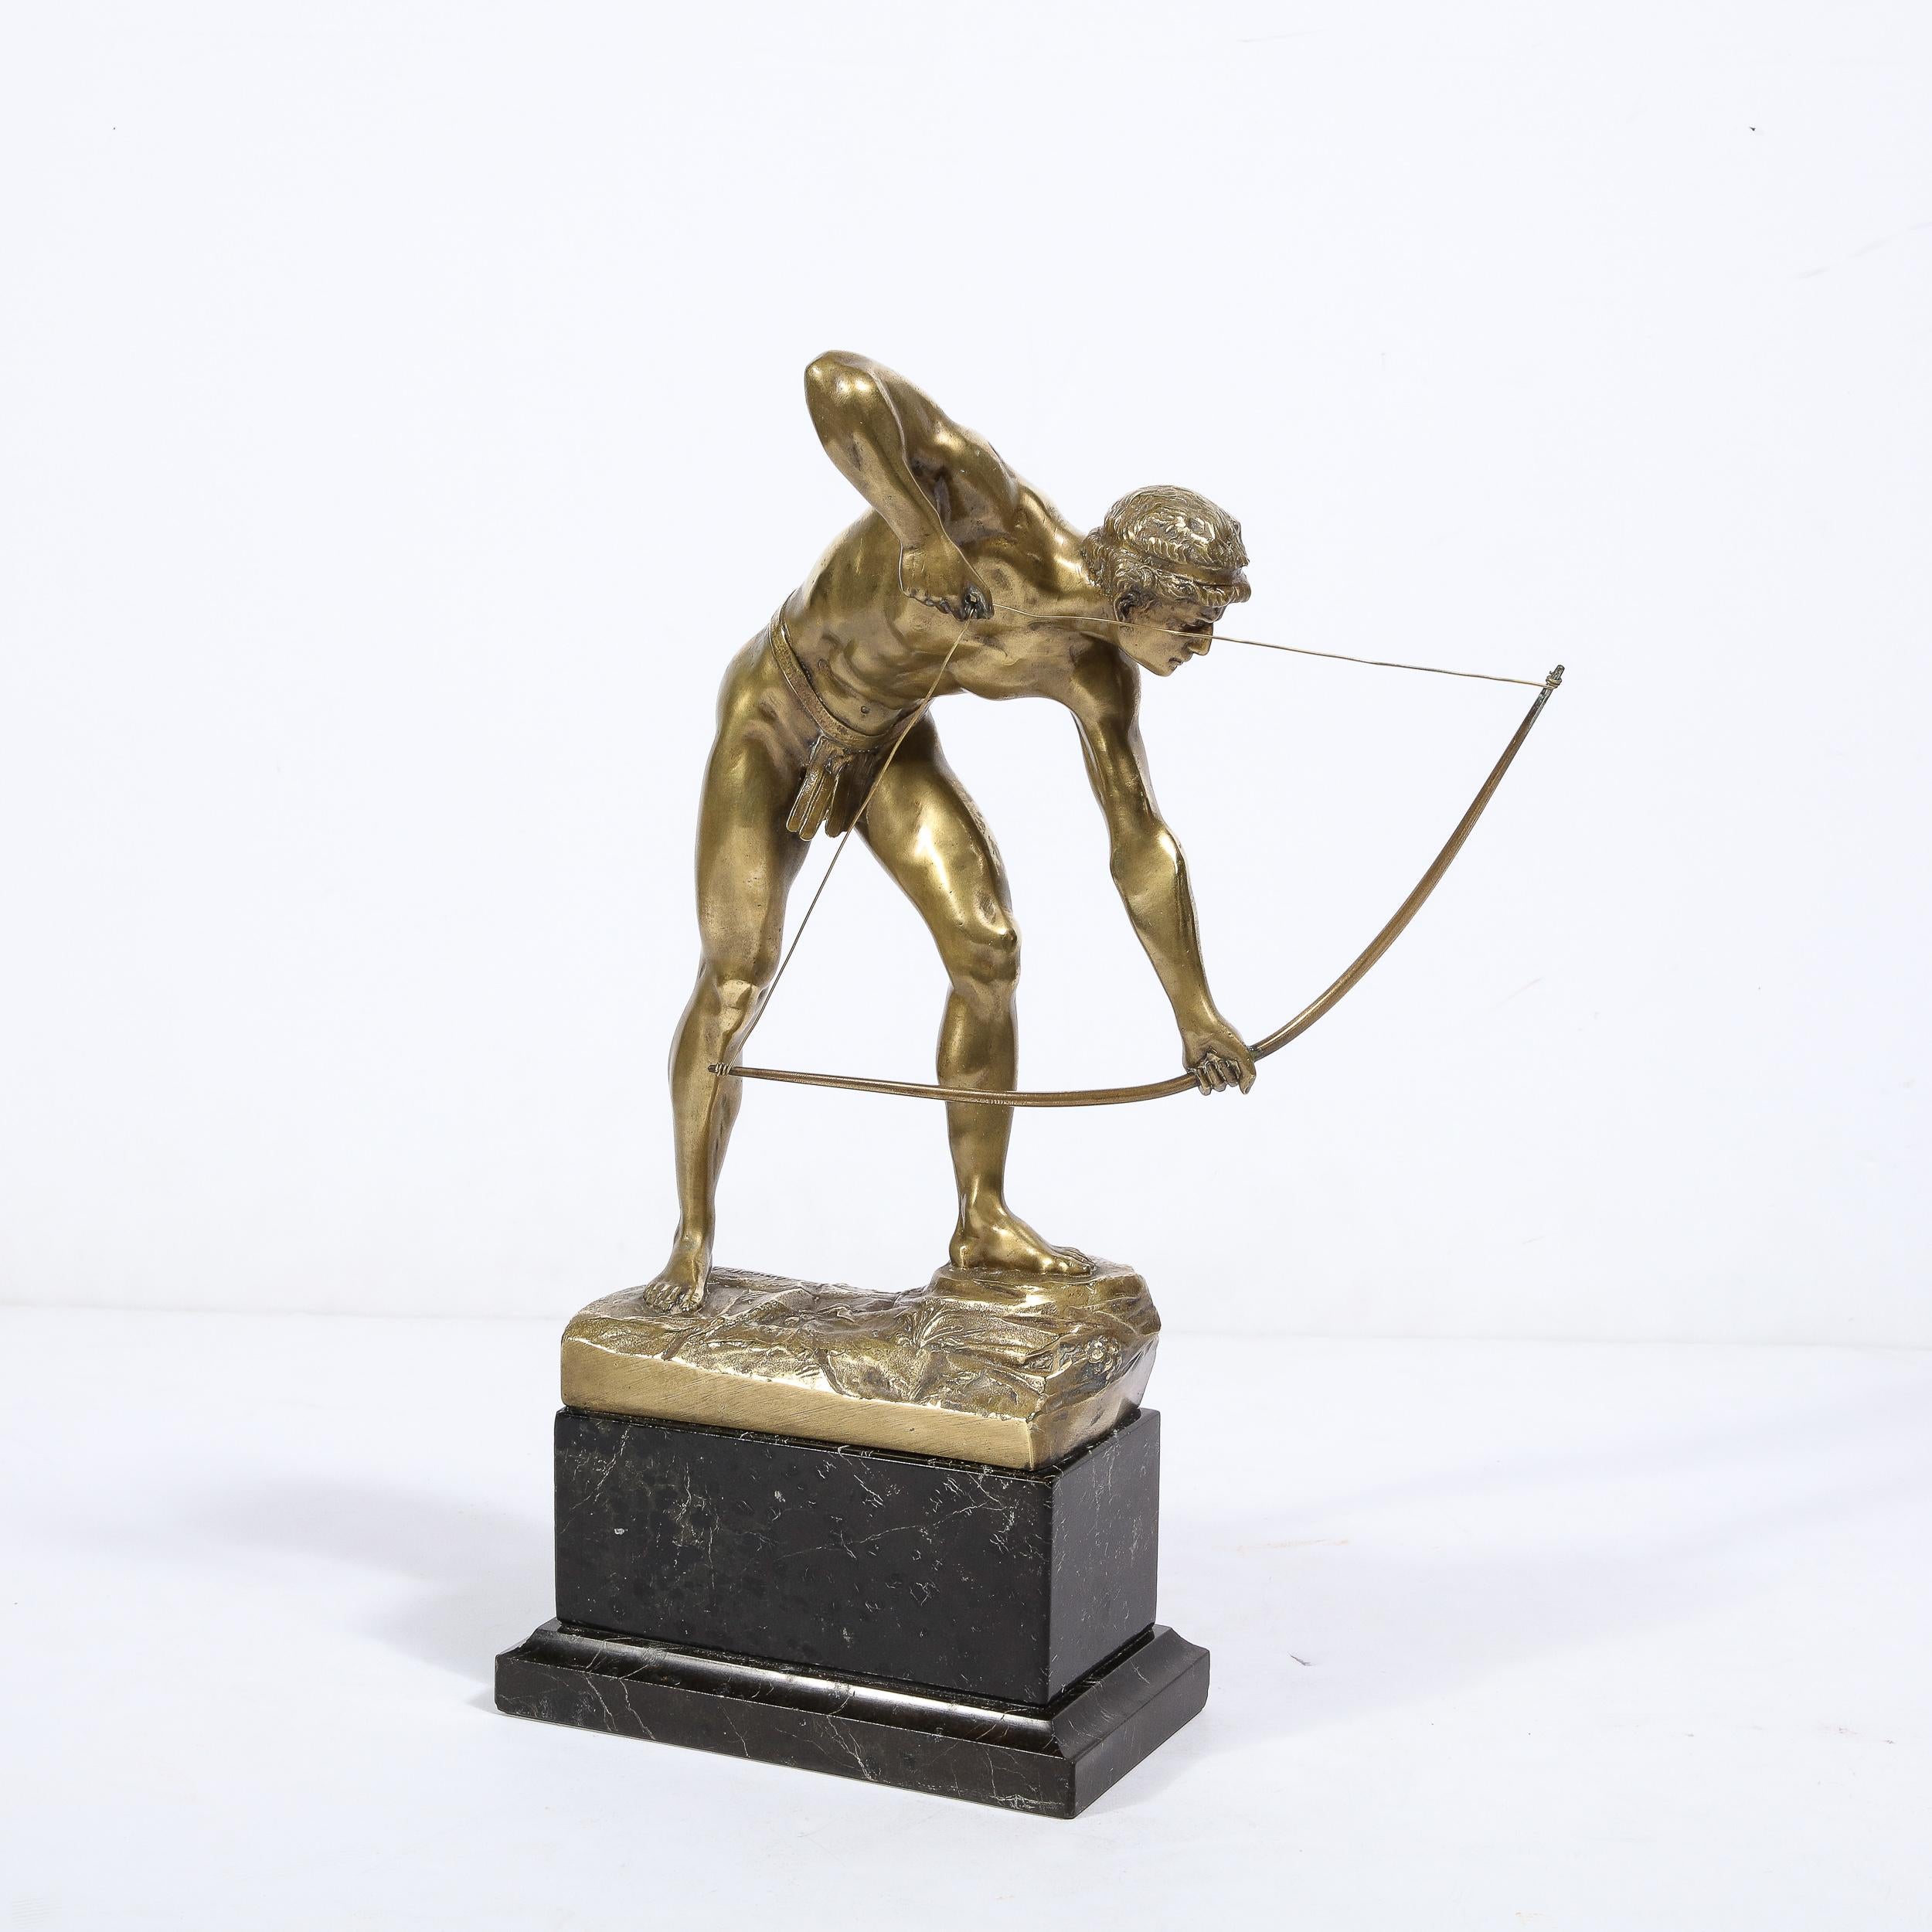 Early 20th Century Art Deco Gilt Bronze Archer Sculpture on Black Marble Base by Otto Schmidt-Hofer For Sale